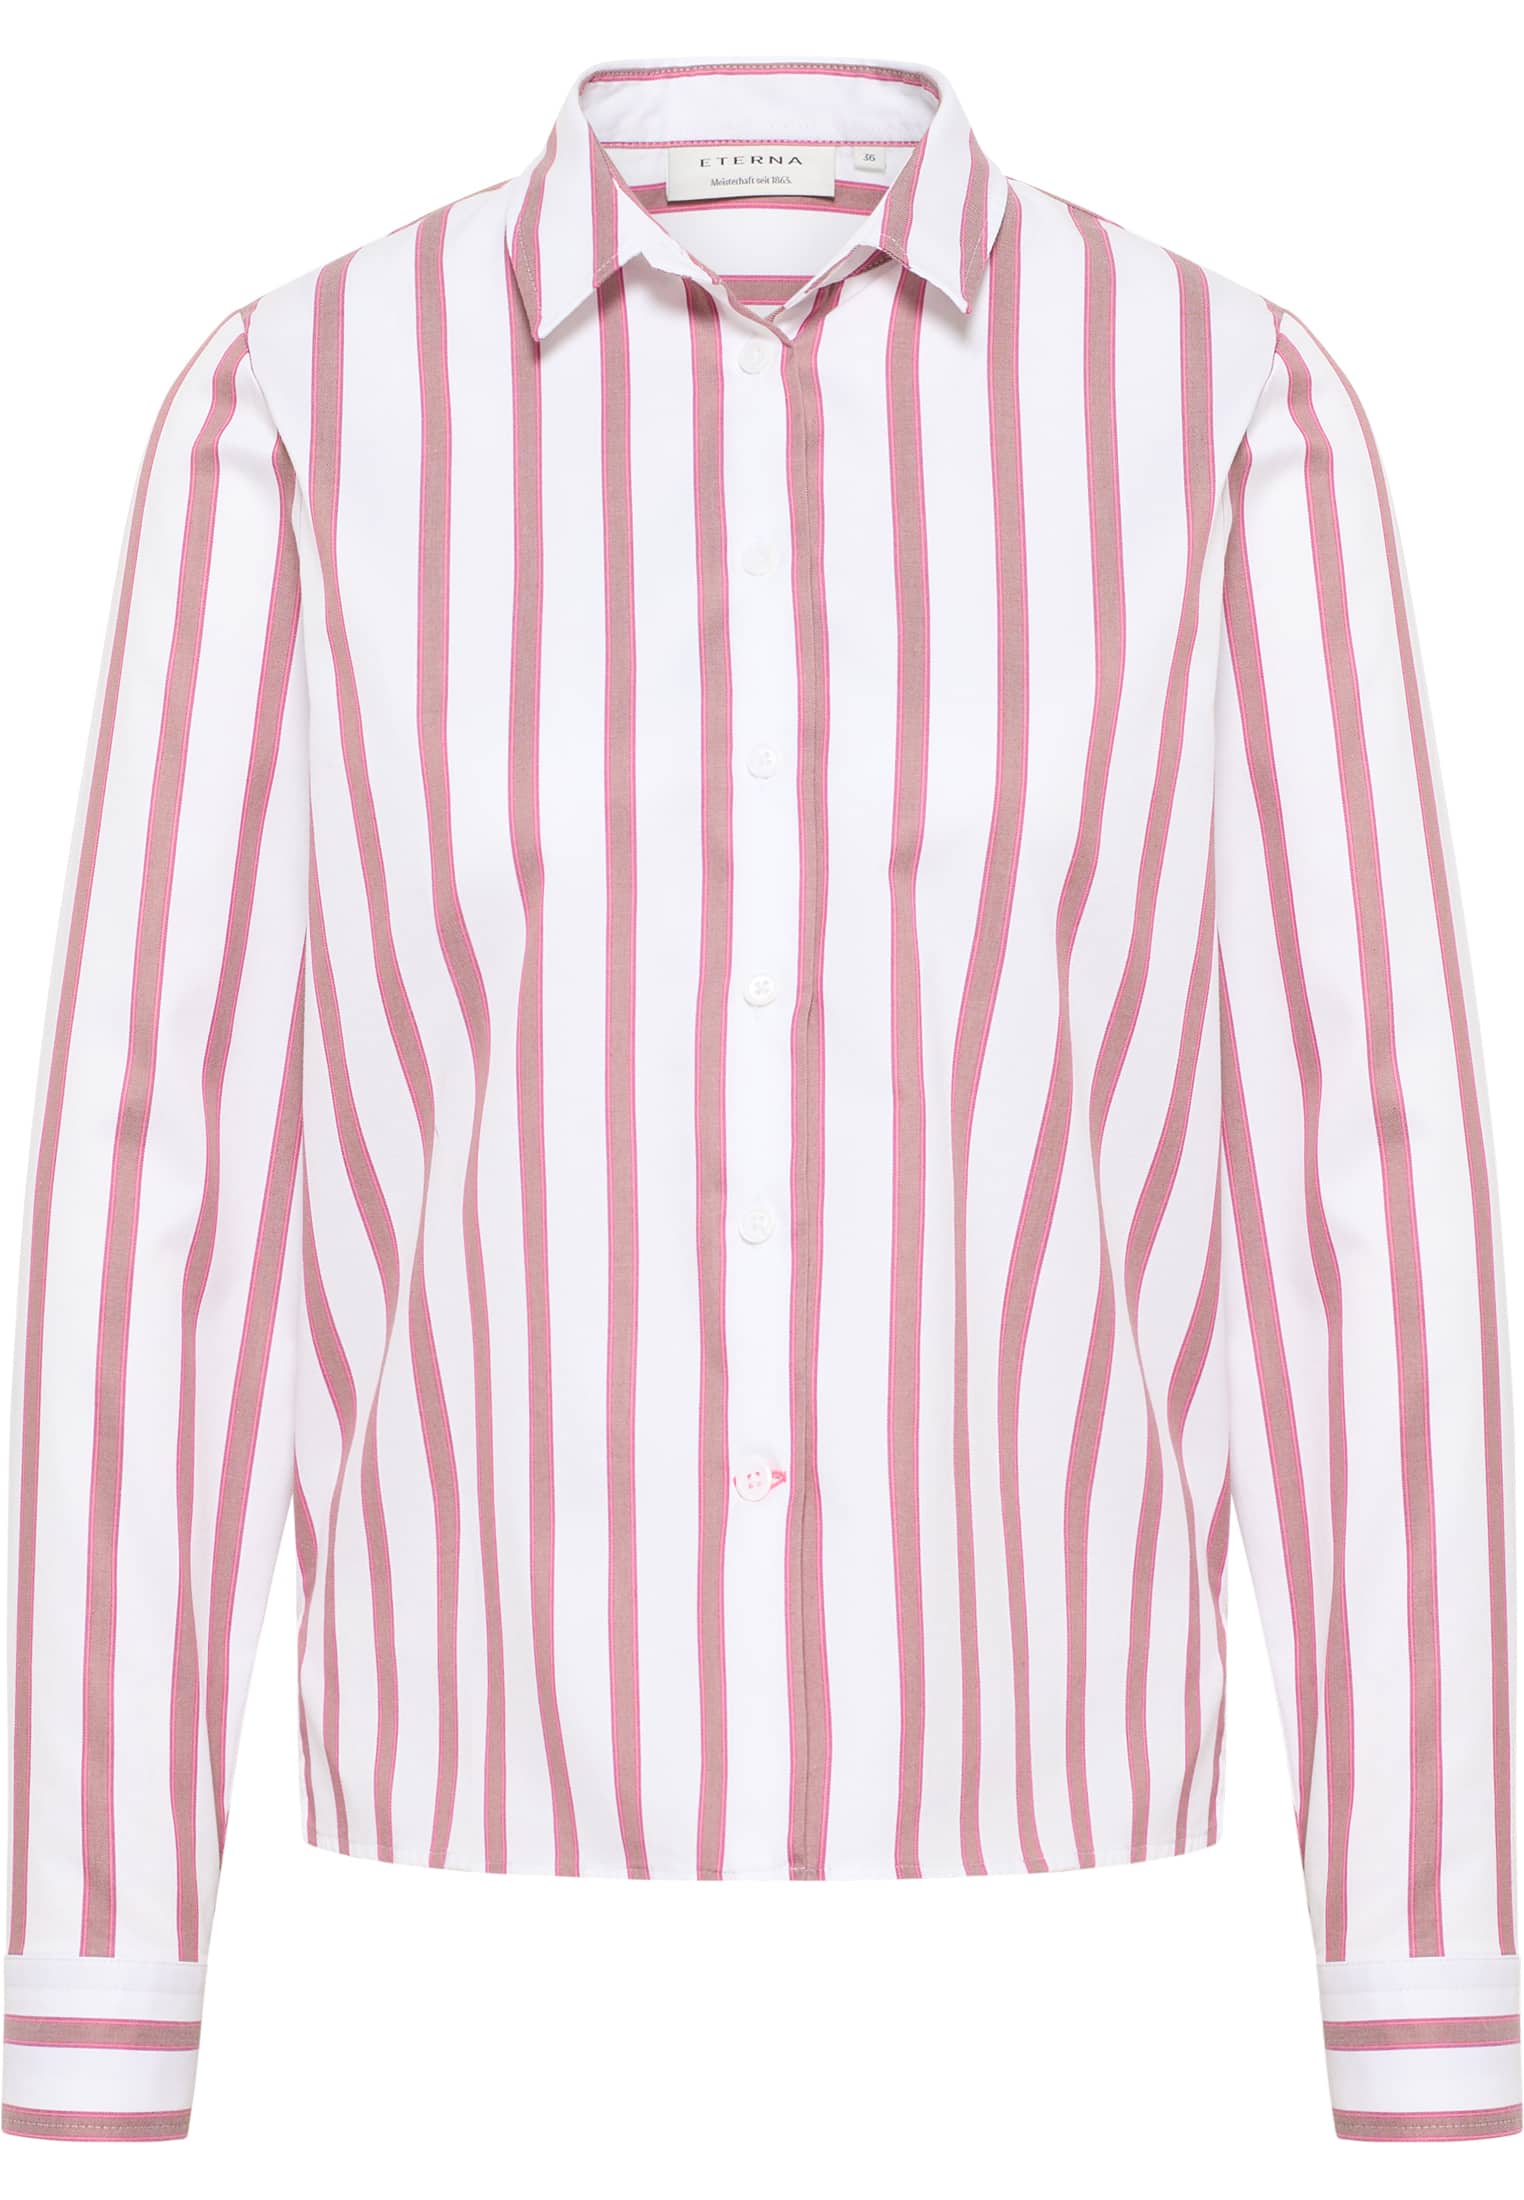 Soft Luxury Shirt Bluse pink | 2BL04213-15-21-46-1/1 | gestreift Langarm | pink | 46 in